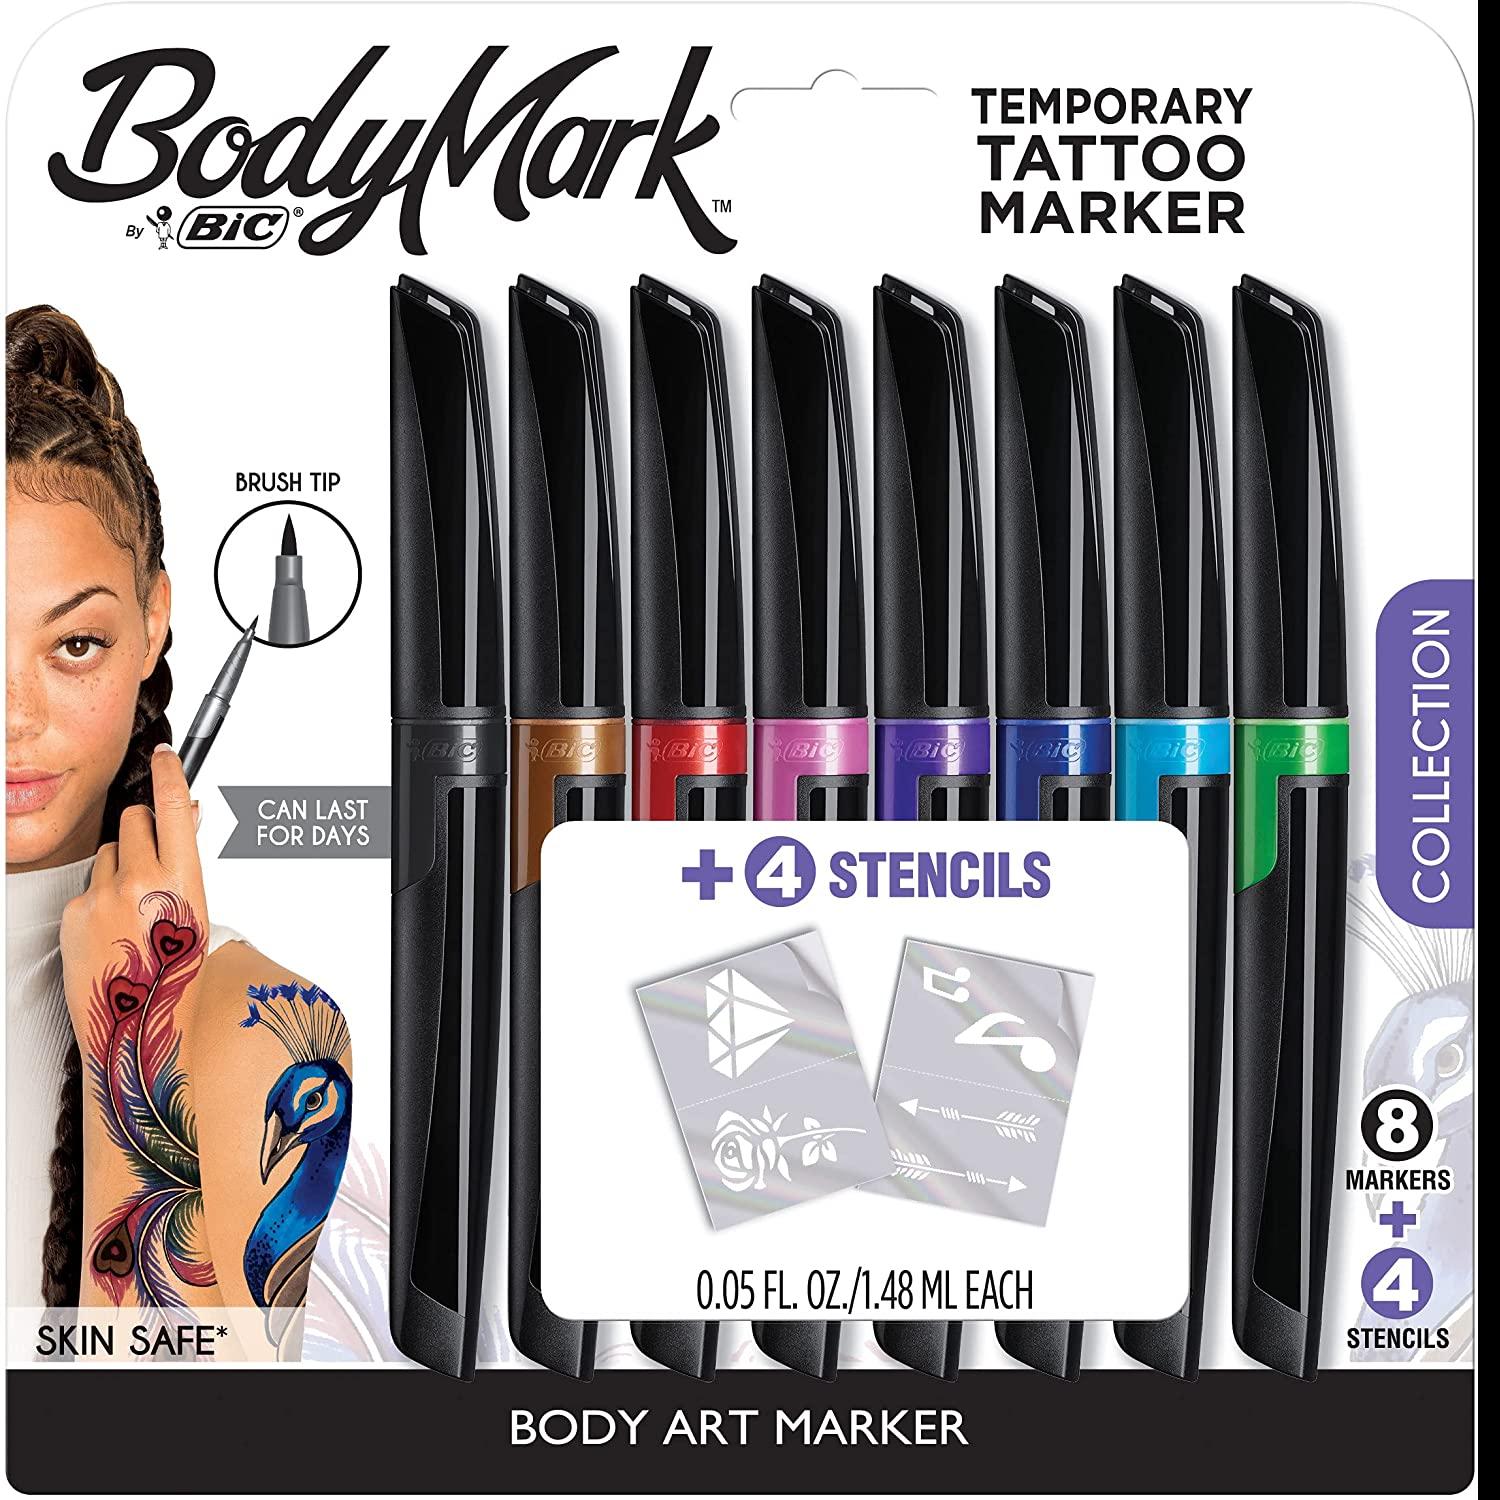 8 BIC BodyMark Temporary Tattoo Marker for $9.40